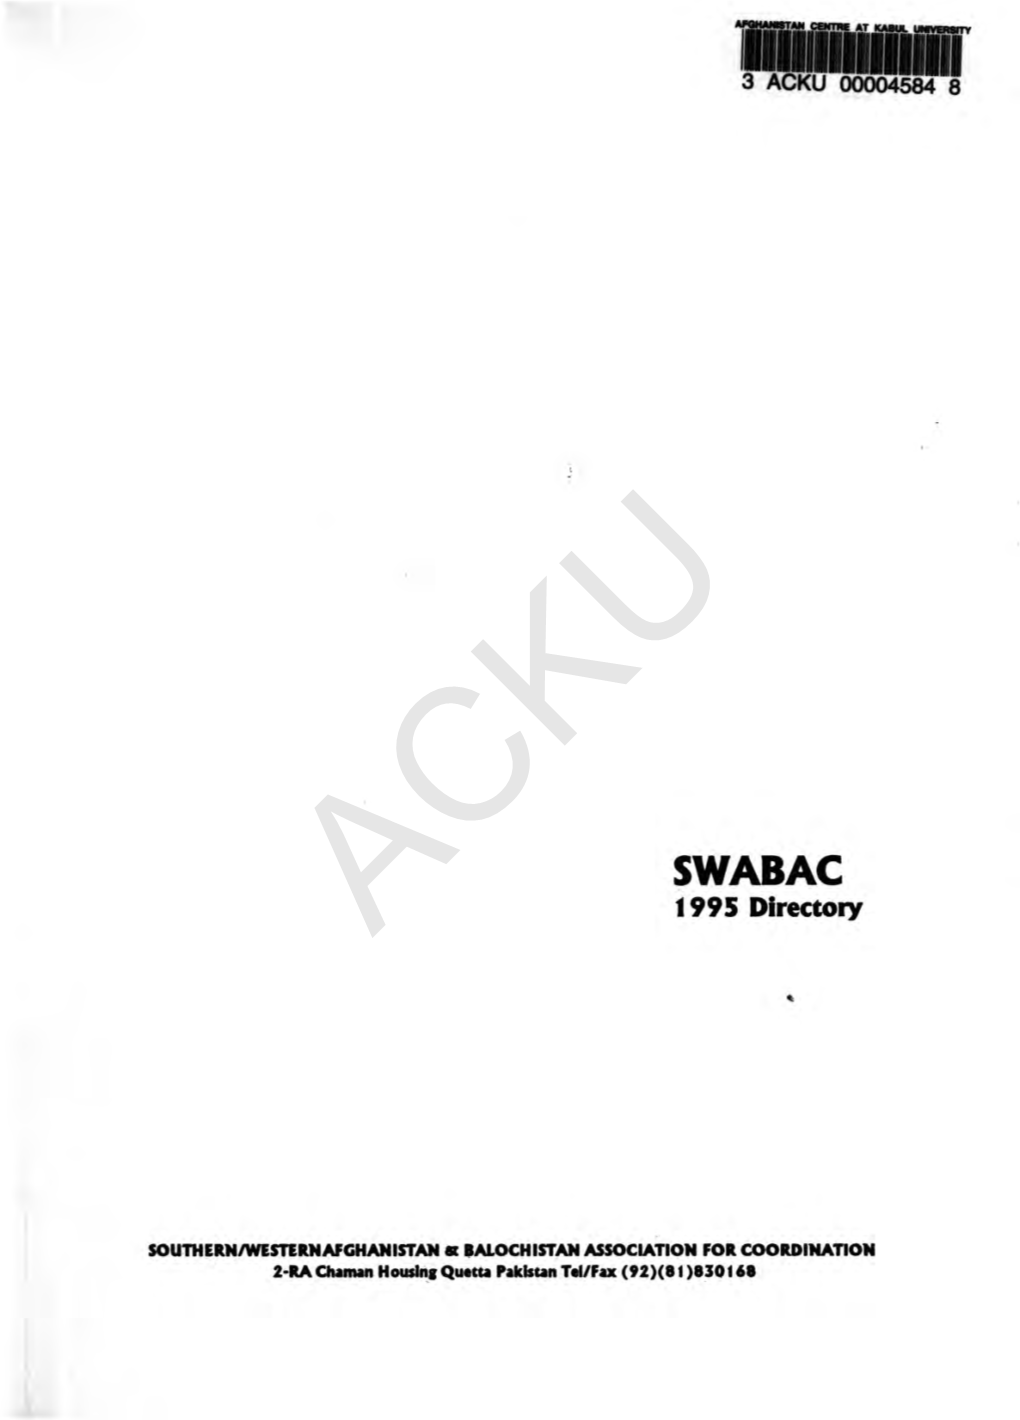 SWABAC Ackut 995 Directory